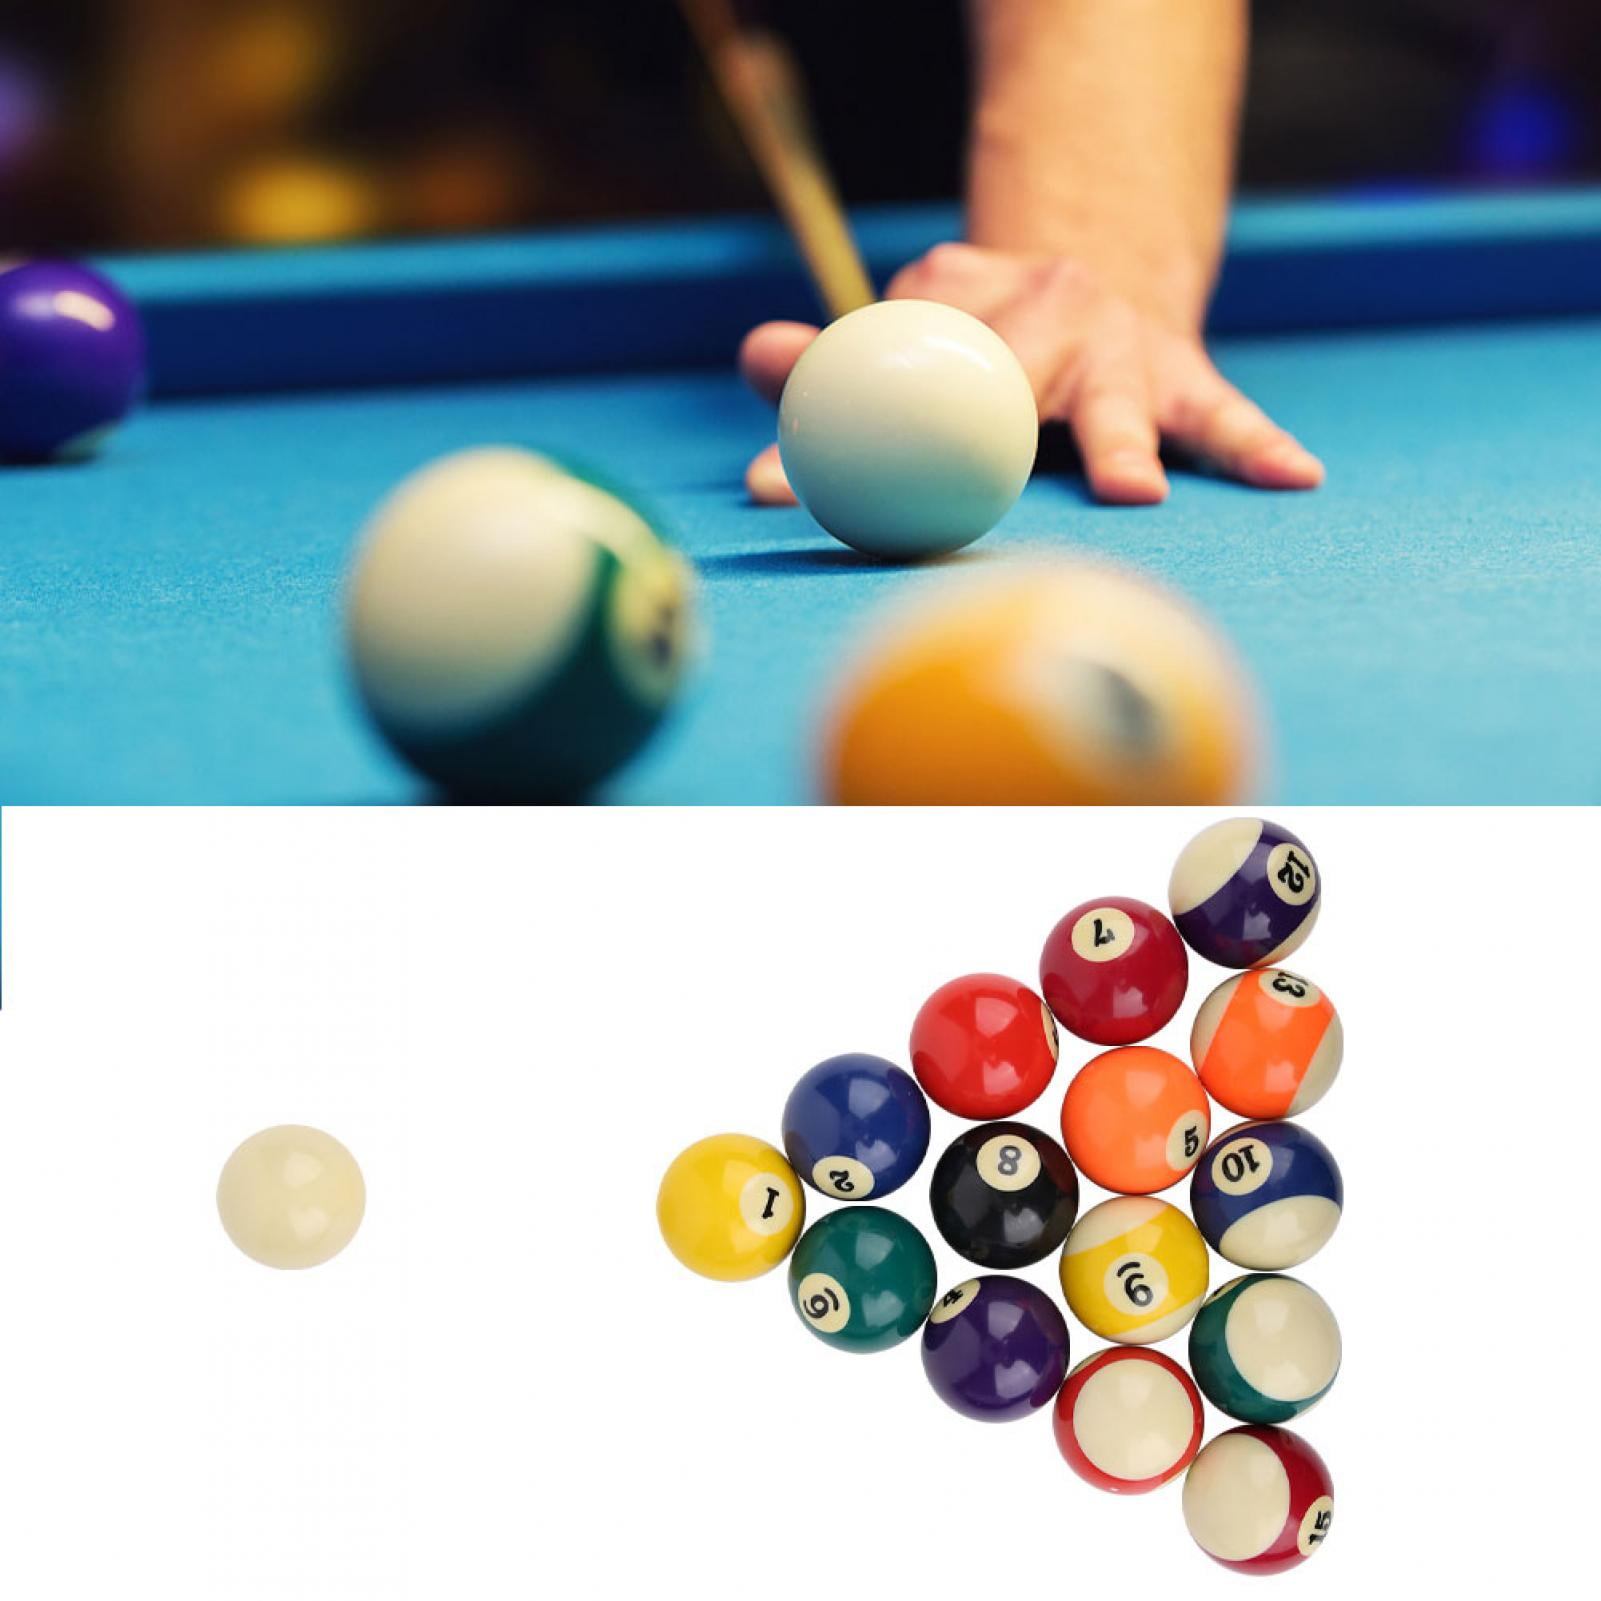 Pool Table billiard ball #8 replacement eight ball standard regular size 5.25cm. 